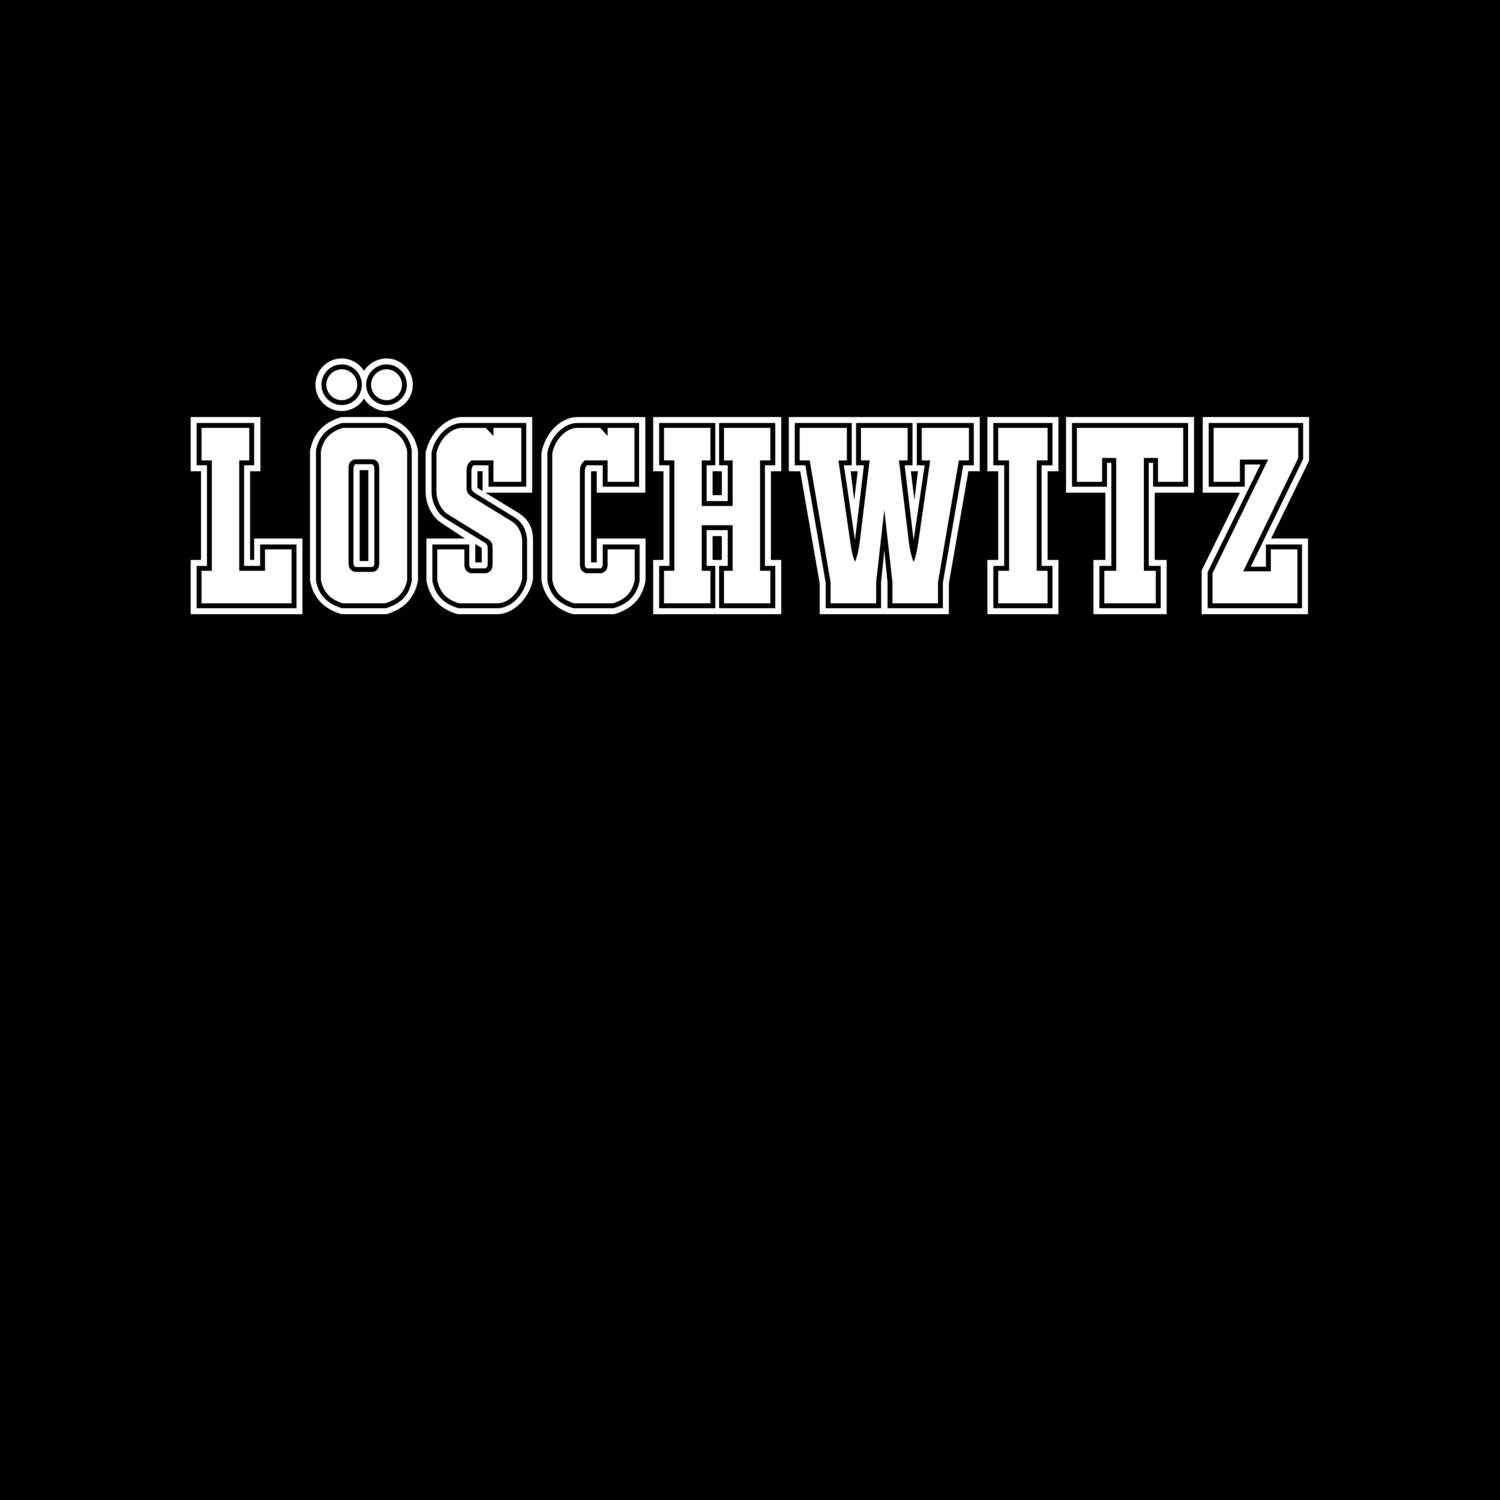 Löschwitz T-Shirt »Classic«